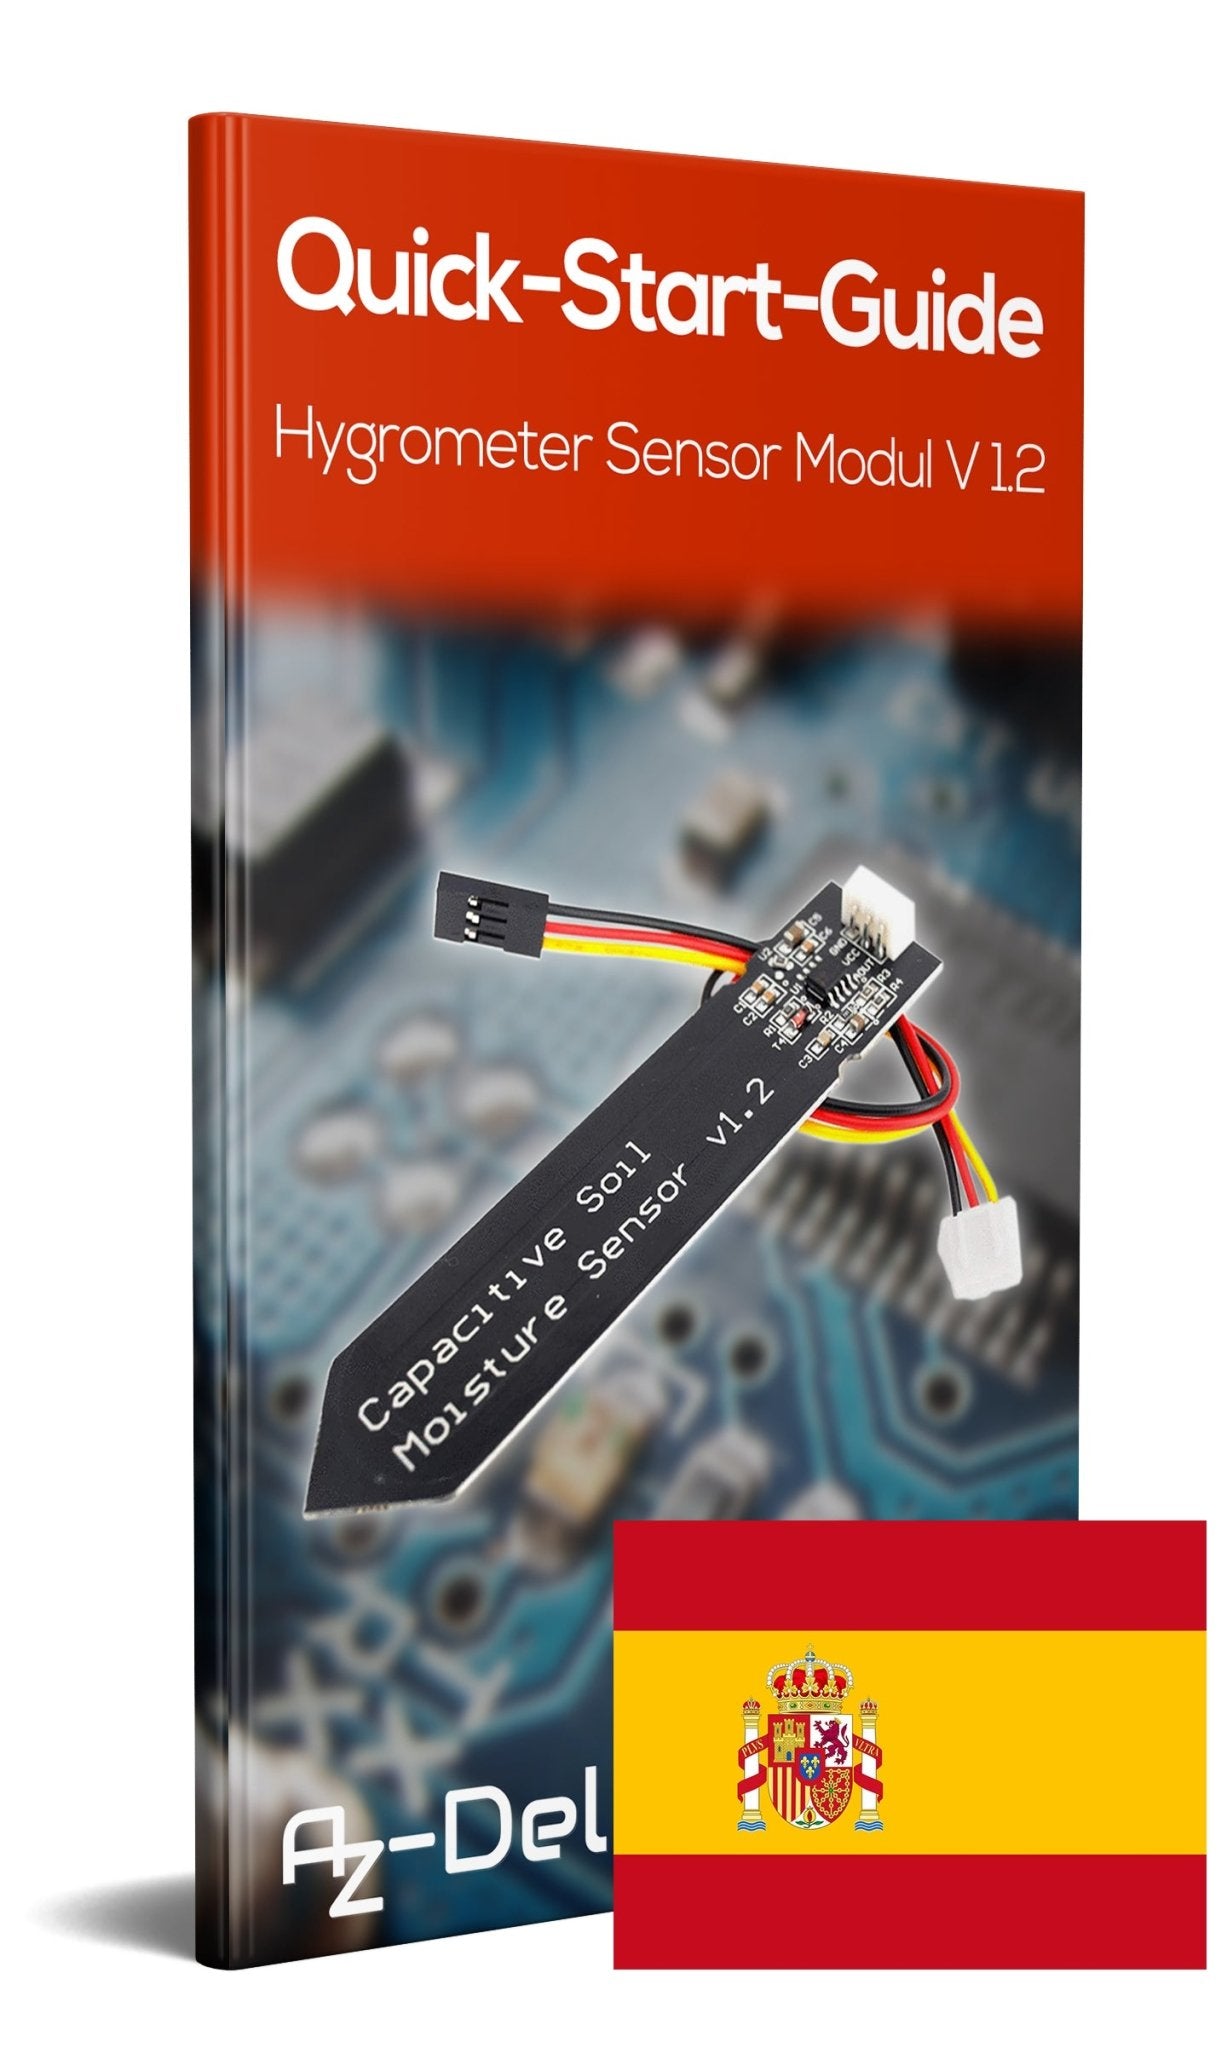 Bodenfeuchtesensor Hygrometer Modul V1.2 kapazitiv - AZ-Delivery